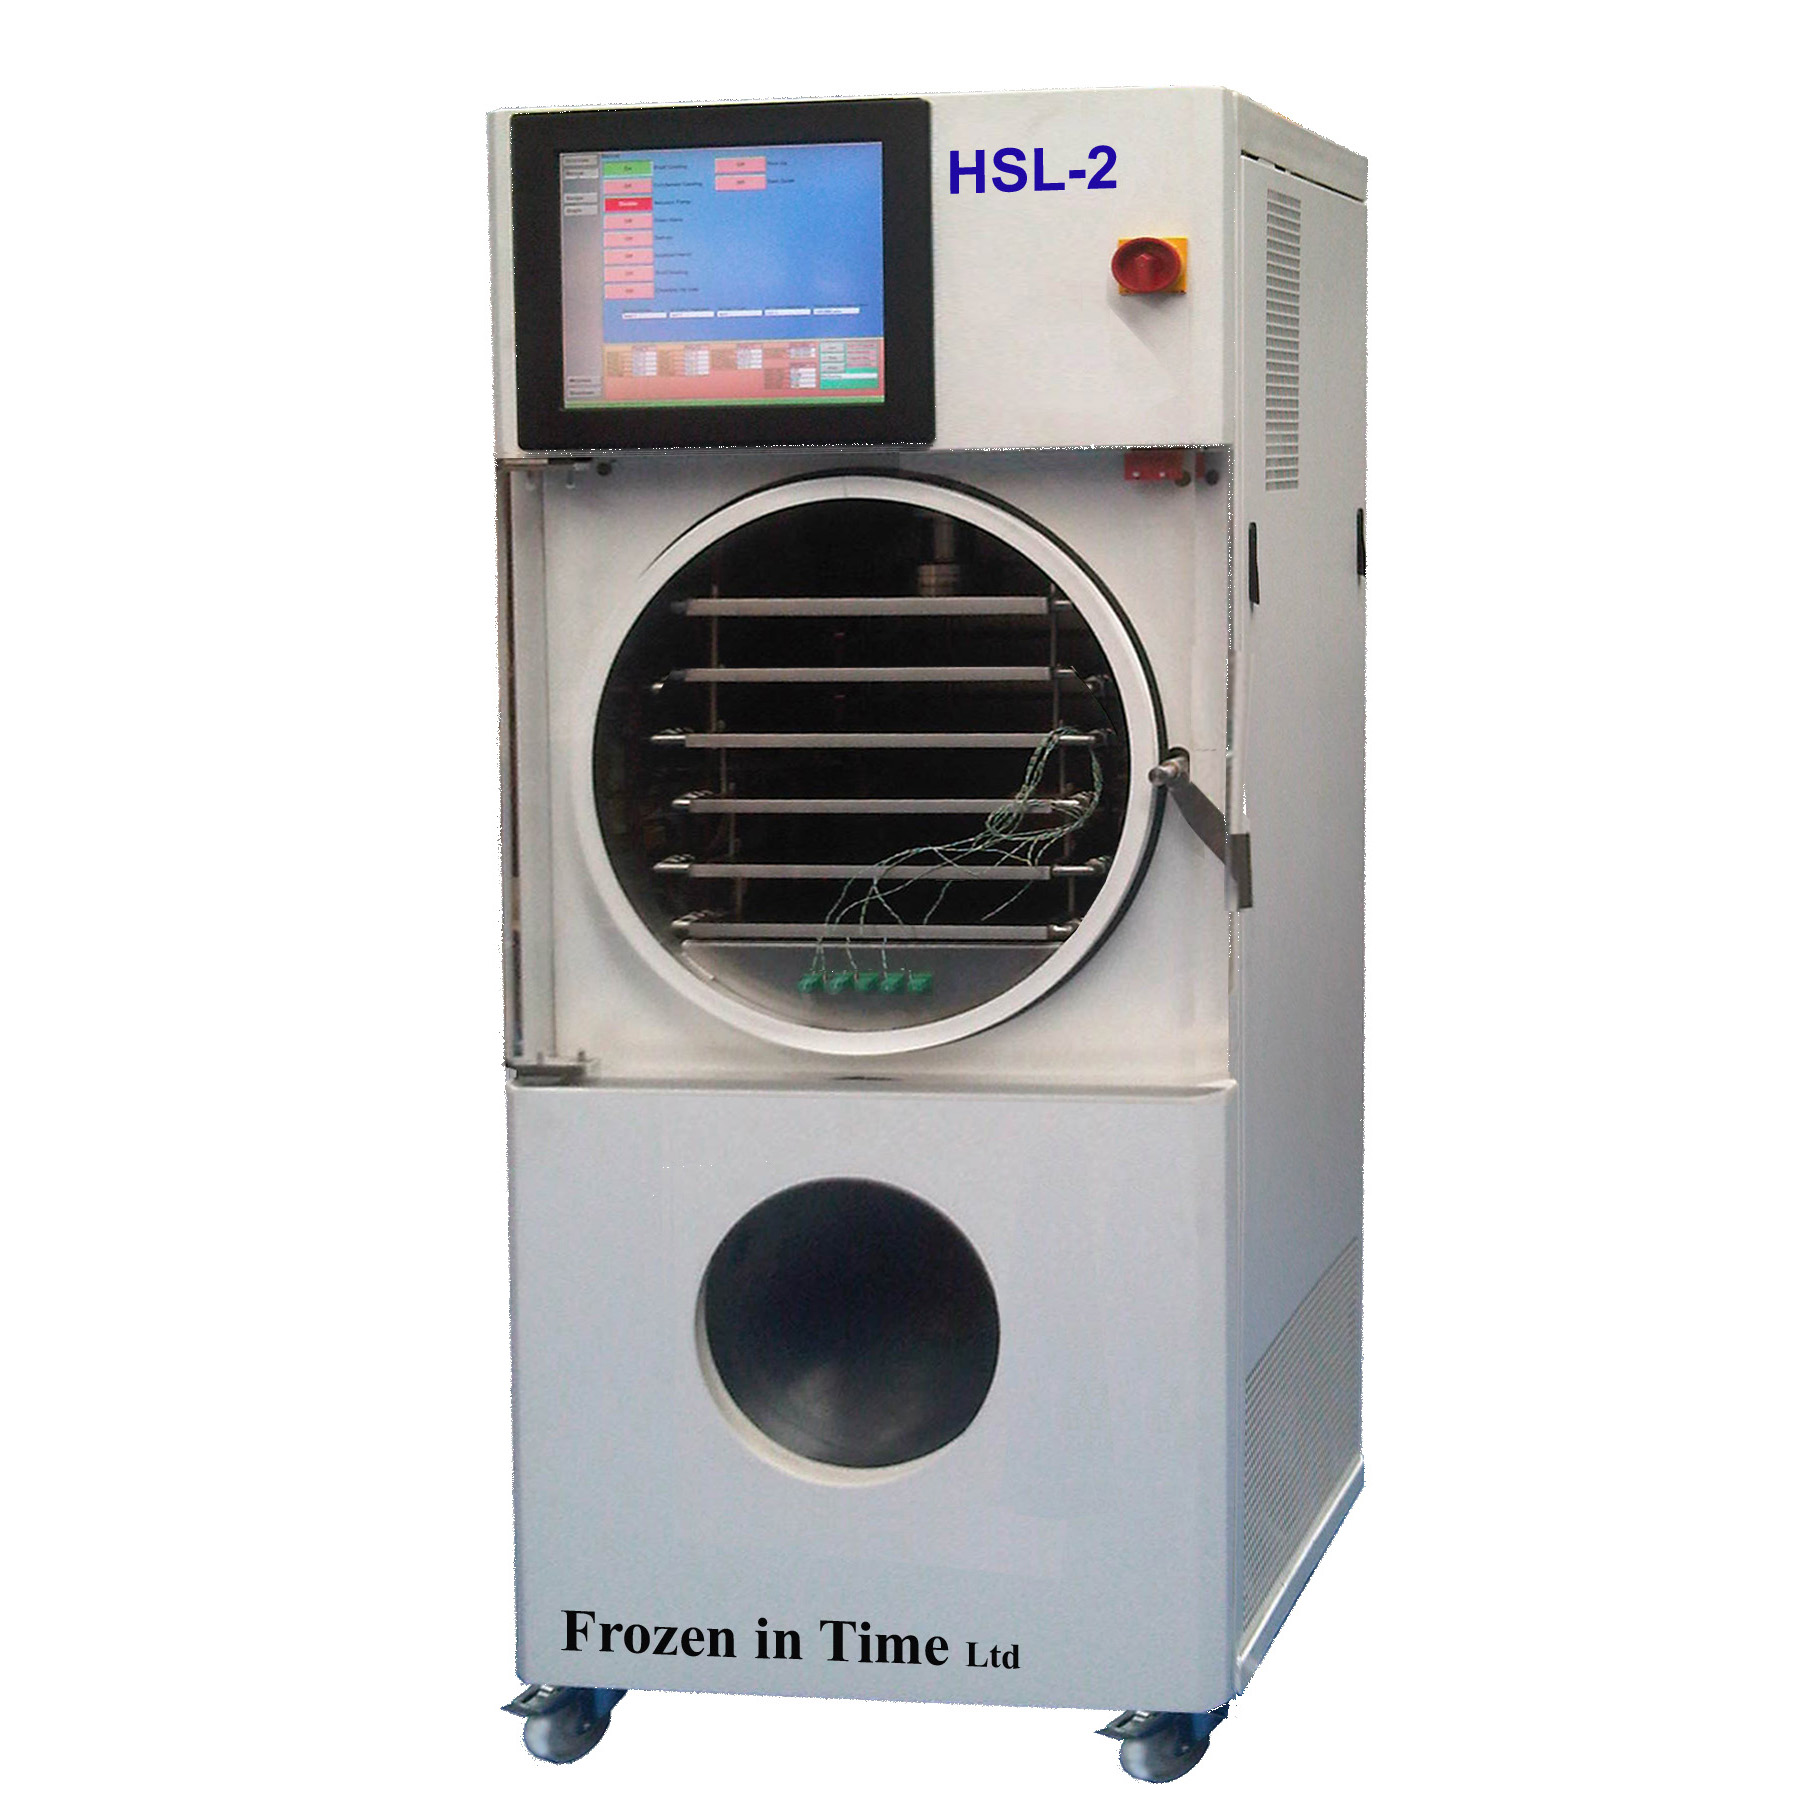 HSL-2 Freeze Drier